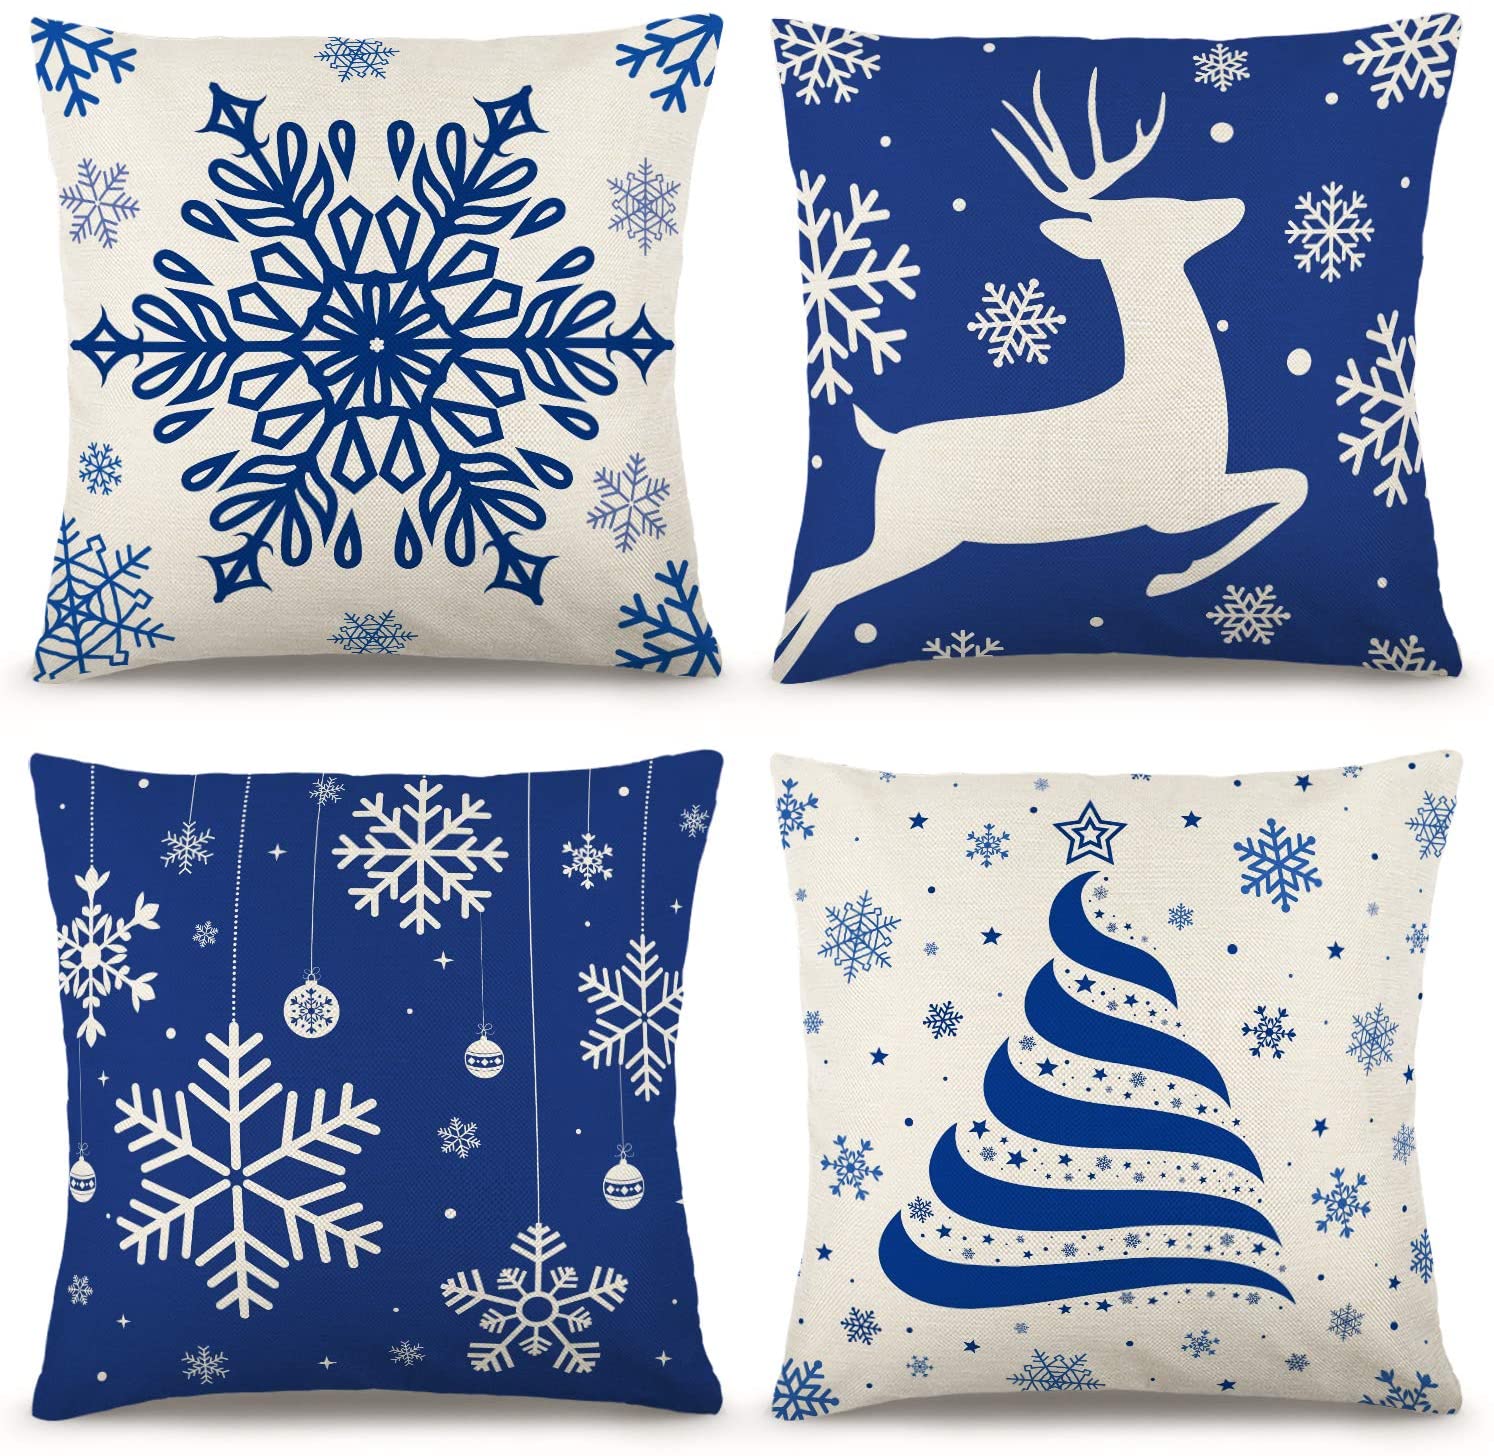 Blue snowflake throw pillow cover